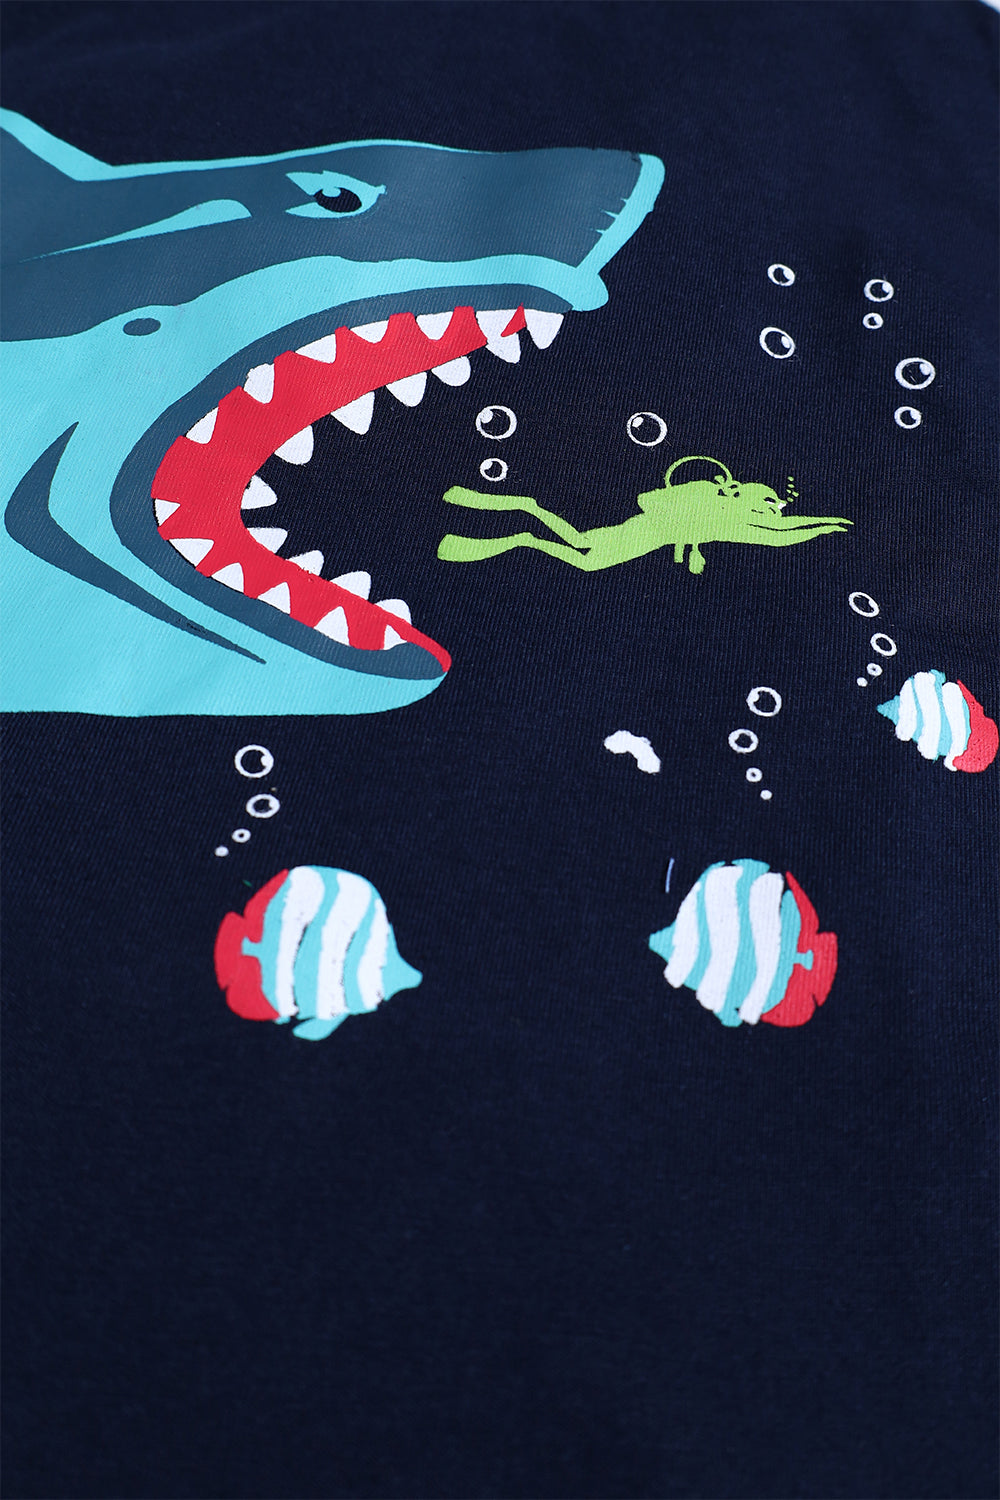 Shark garphic T-shirt 100% cotton jersey fabric